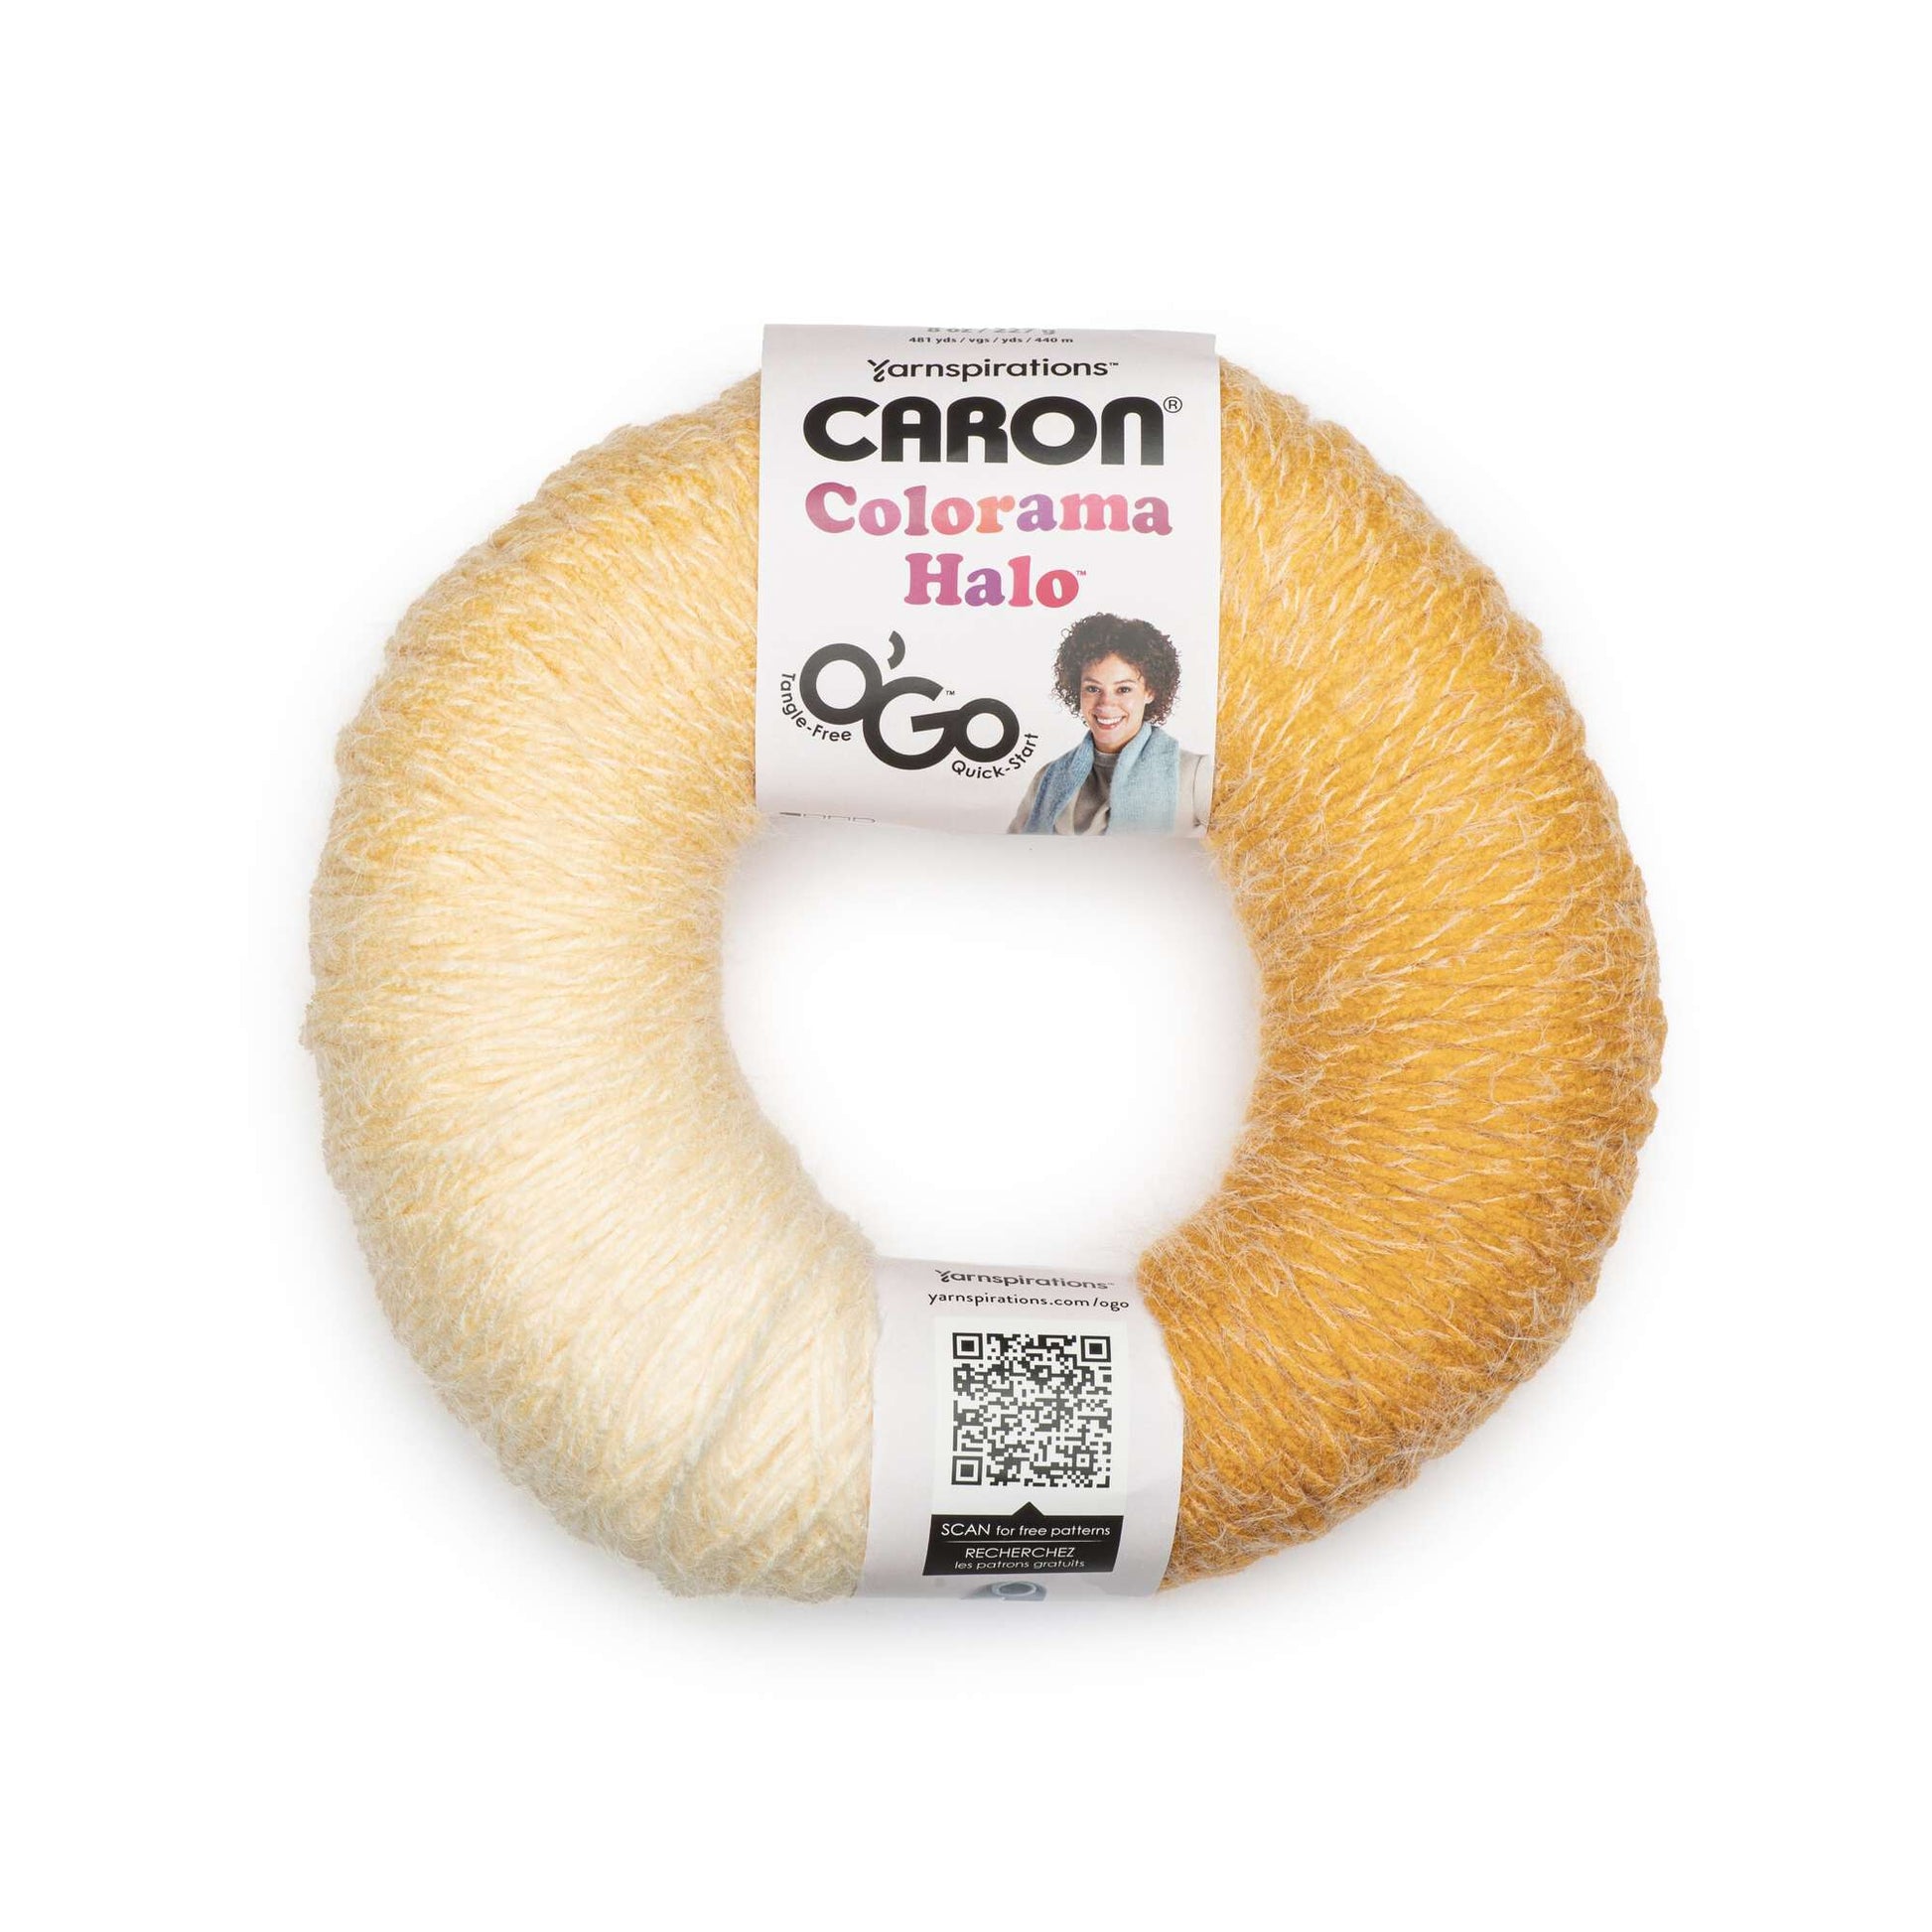 Caron Colorama Halo O'Go Yarn - Discontinued Shades Beeswax Frost